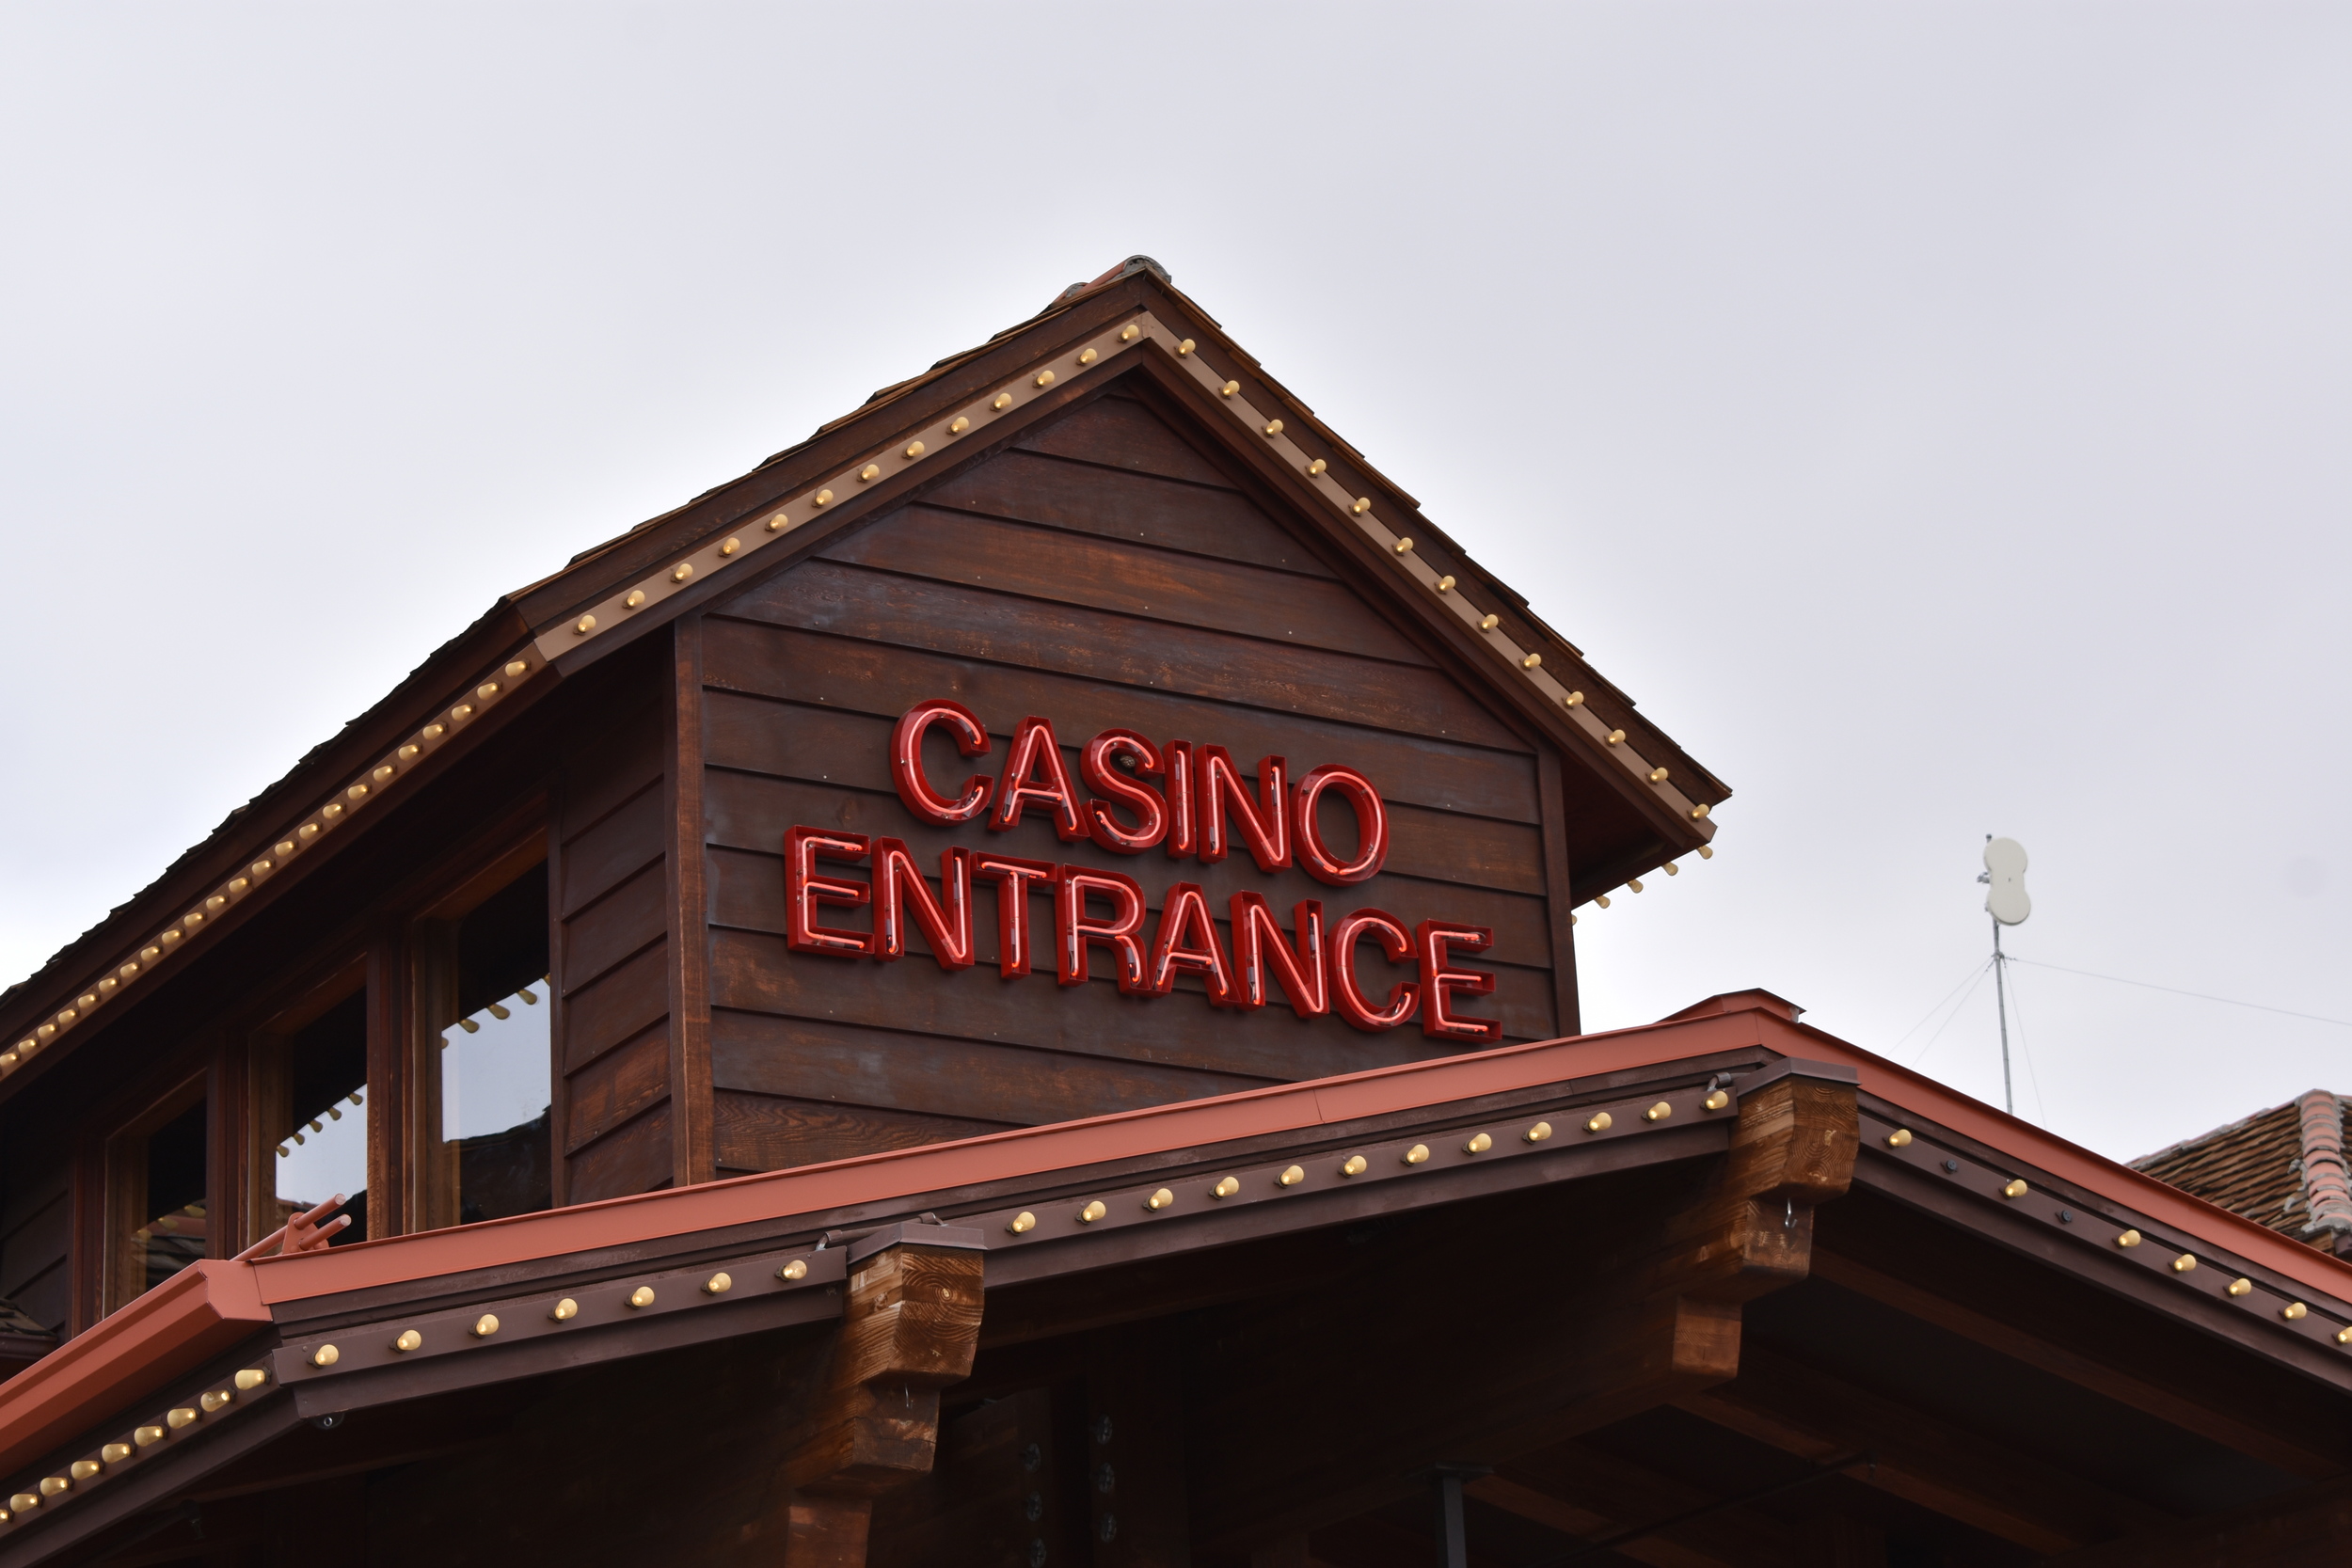 Carson Valley Inn Casino wall mounted sign, Minden, Nevada